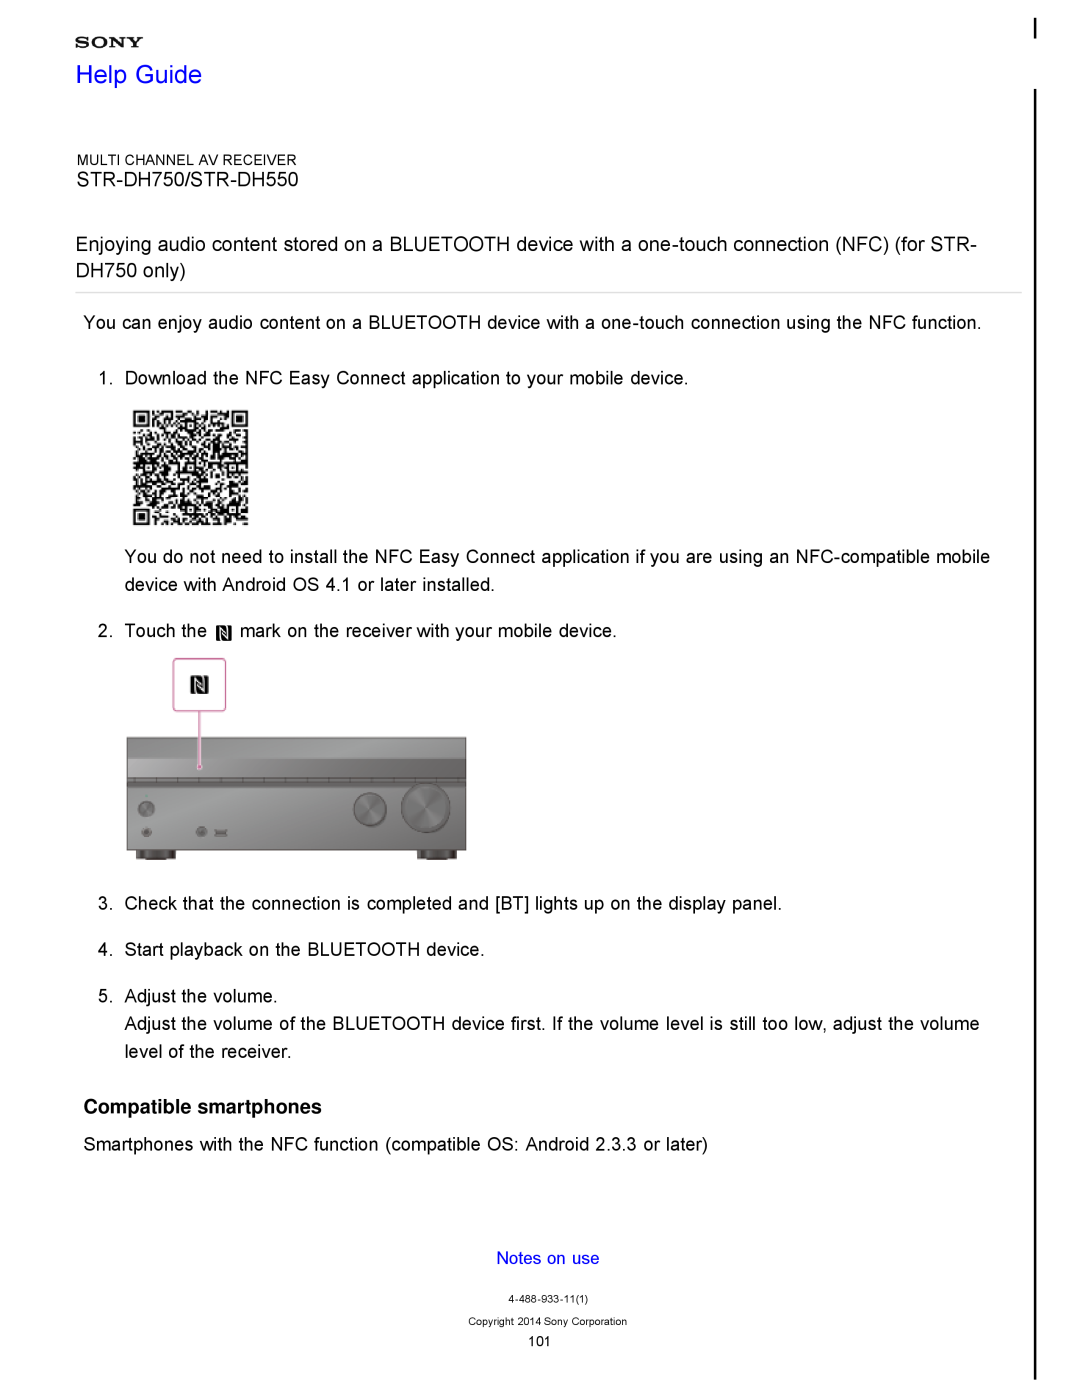 Sony STR-FH750 manual Compatible smartphones, Help Guide, STR-DH750/STR-DH550 